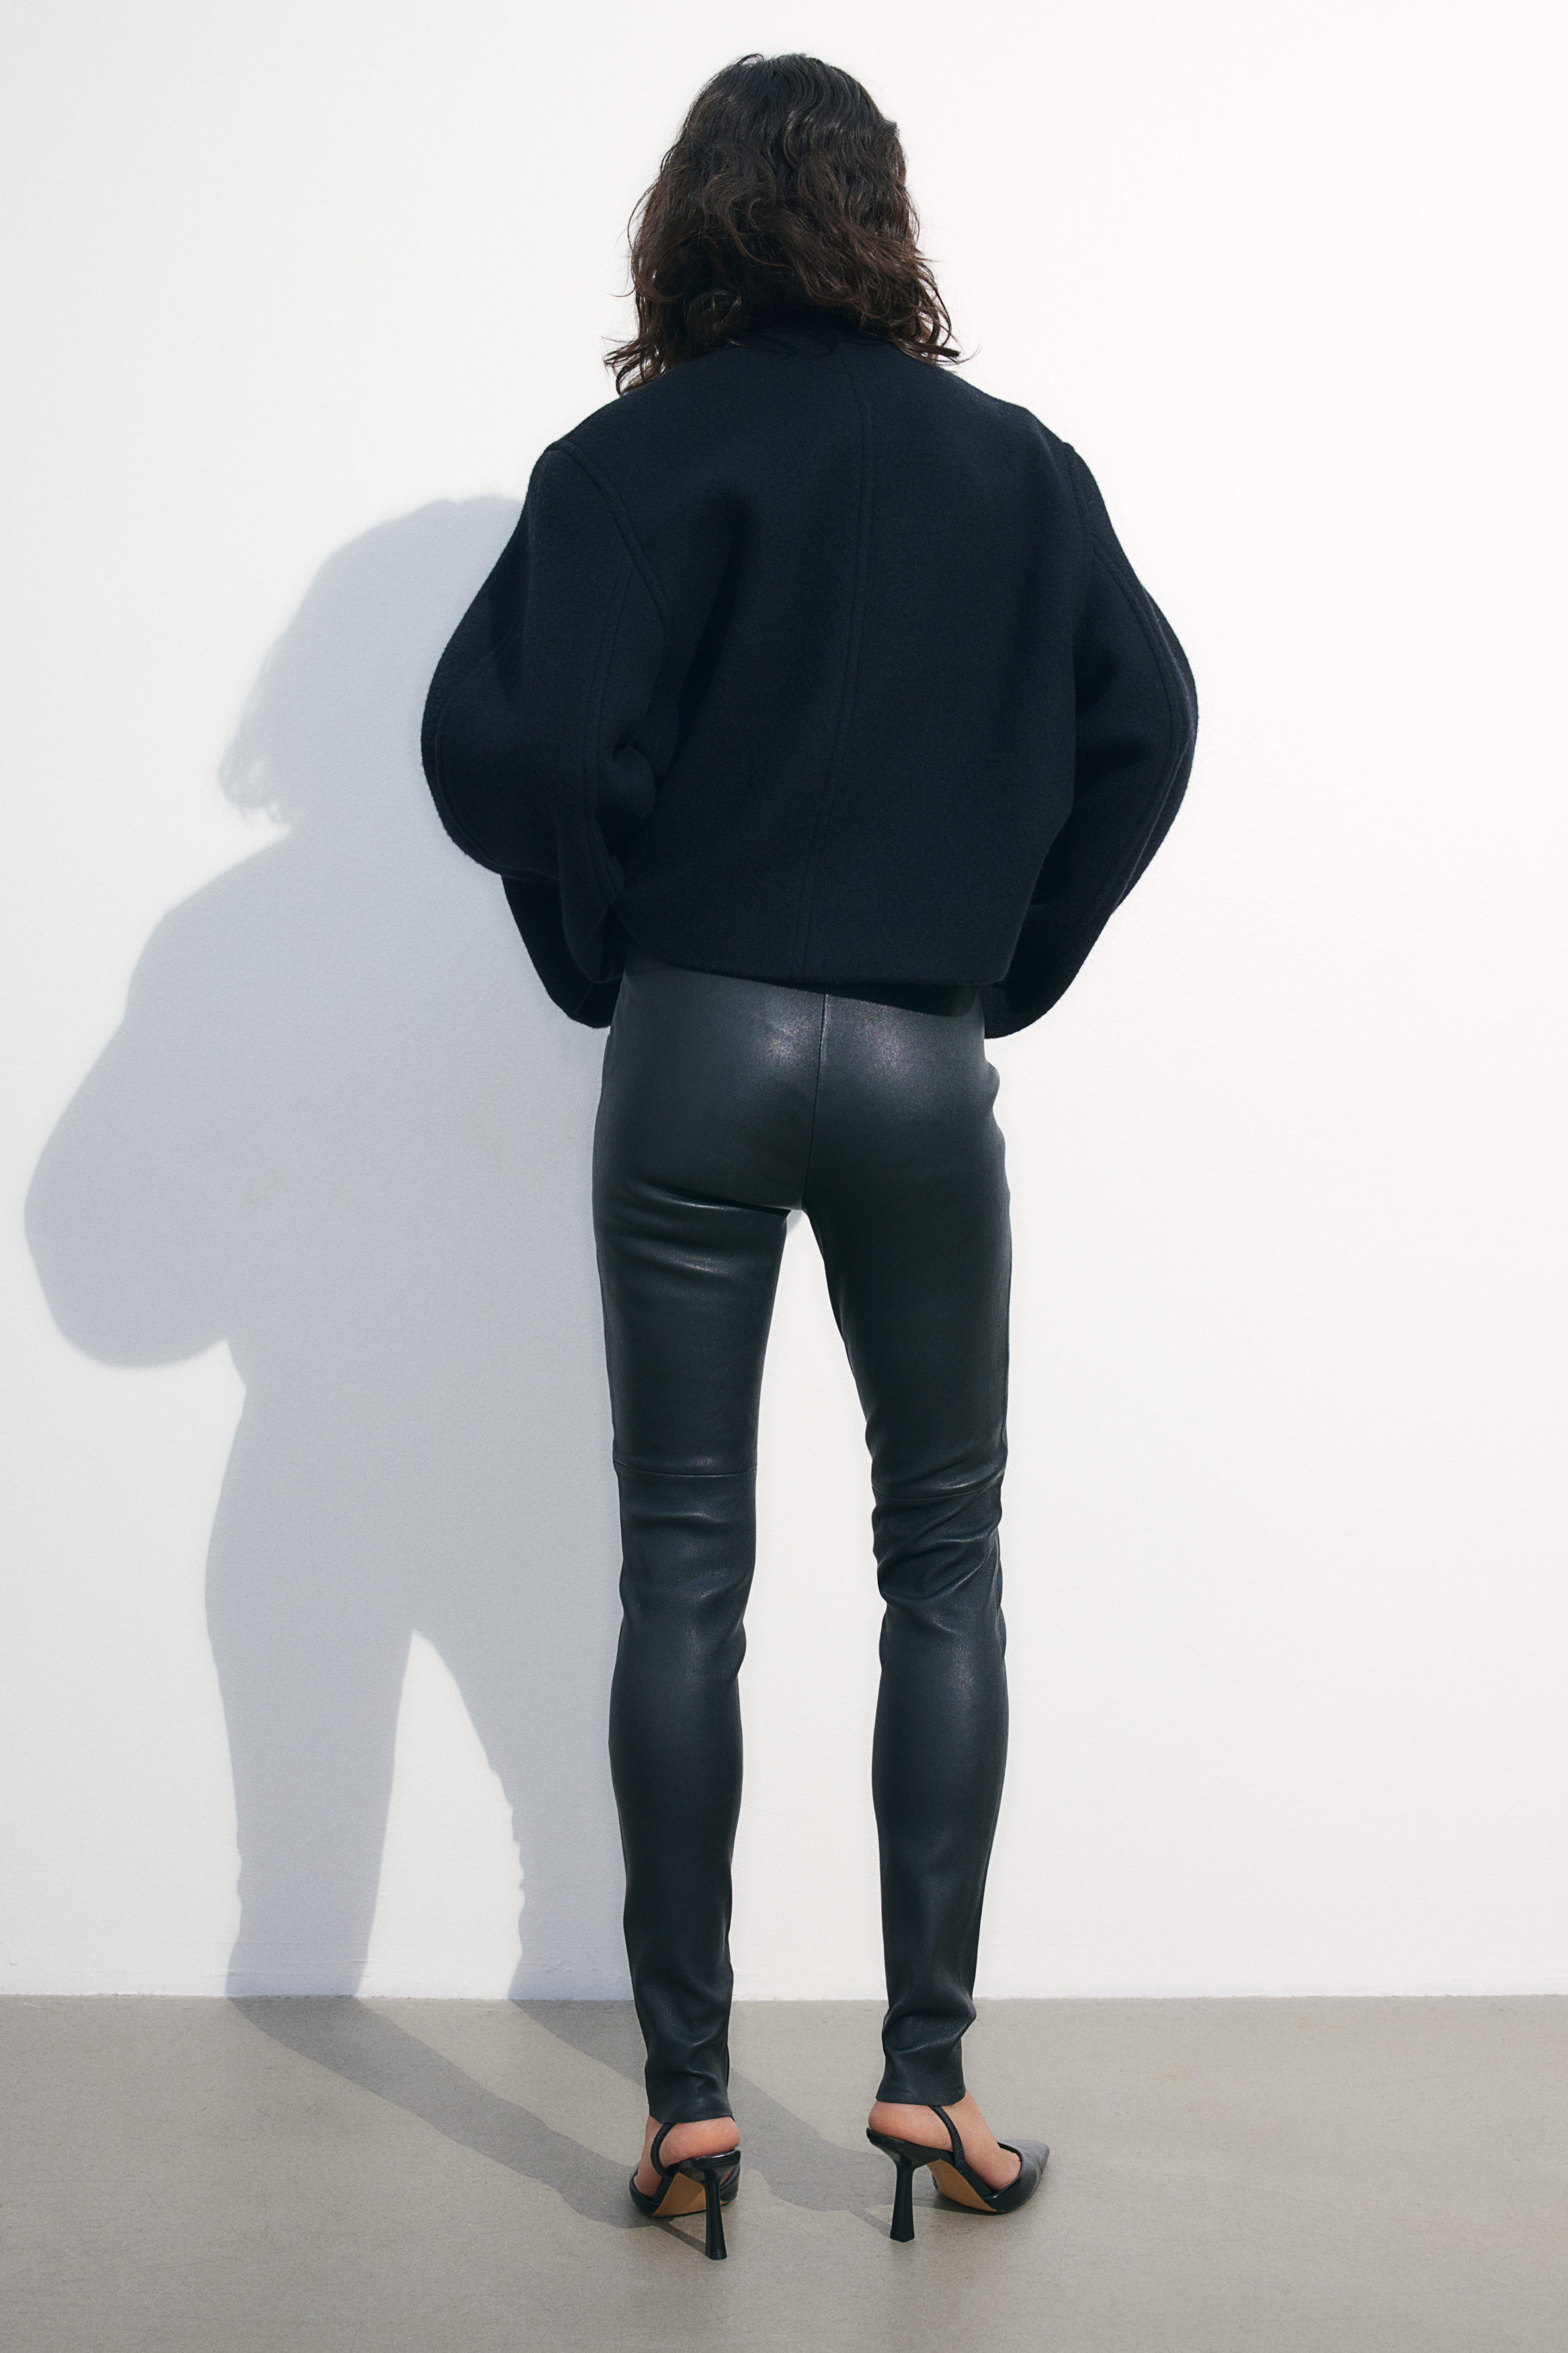 HMGYH satina high waisted leggings for women Split Hem PU Leather Skinny  Pants (Color : Black, Size : S)